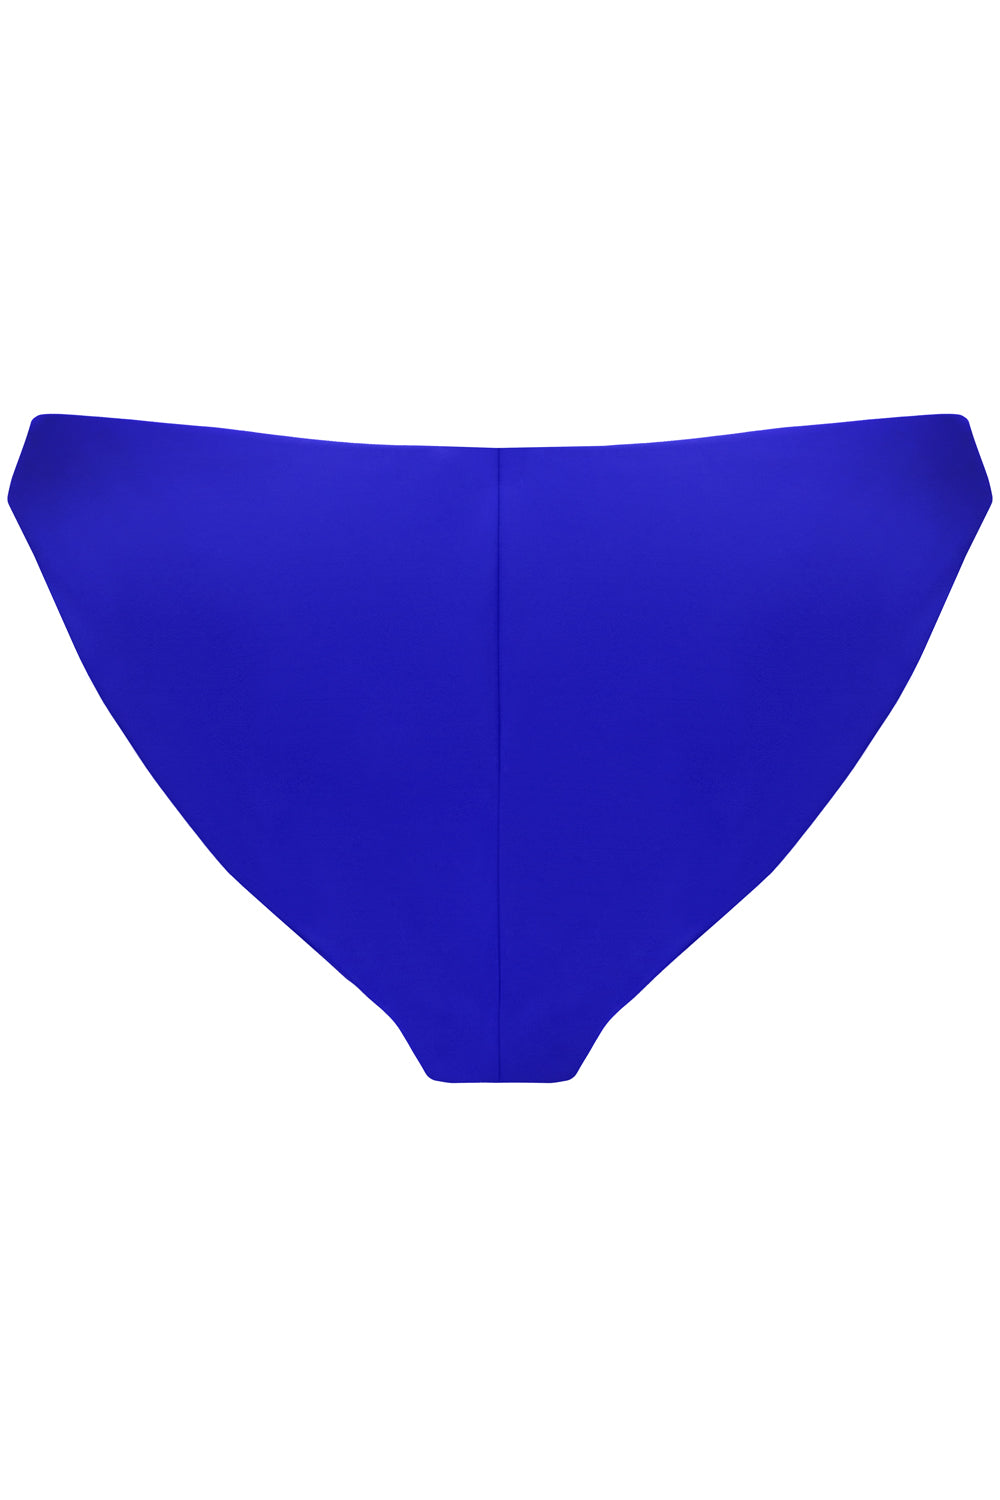 Radiya Electric bikini bottom - Bikini bottom by Keosme. Shop on yesUndress